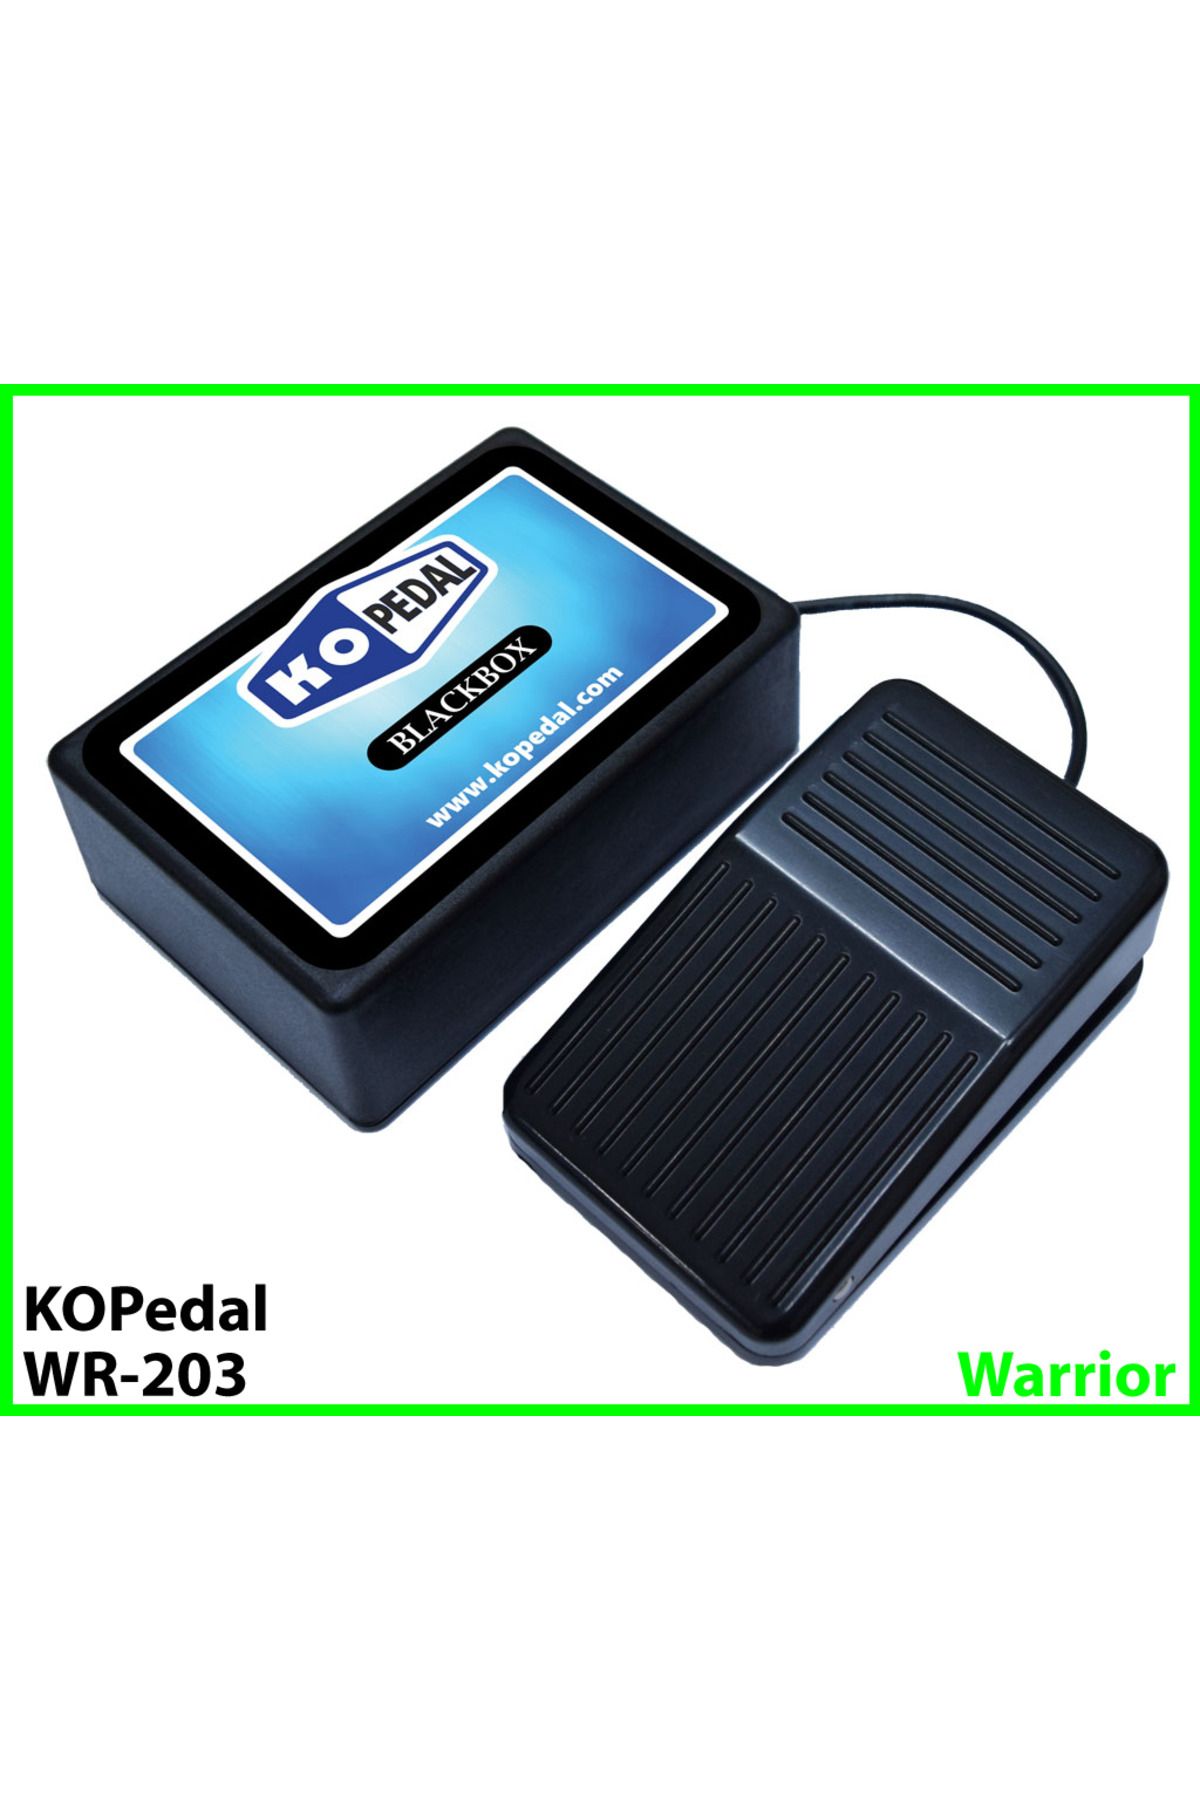 kopedal Warrior Usko/pvp Hp Combo Pedal Wr-203